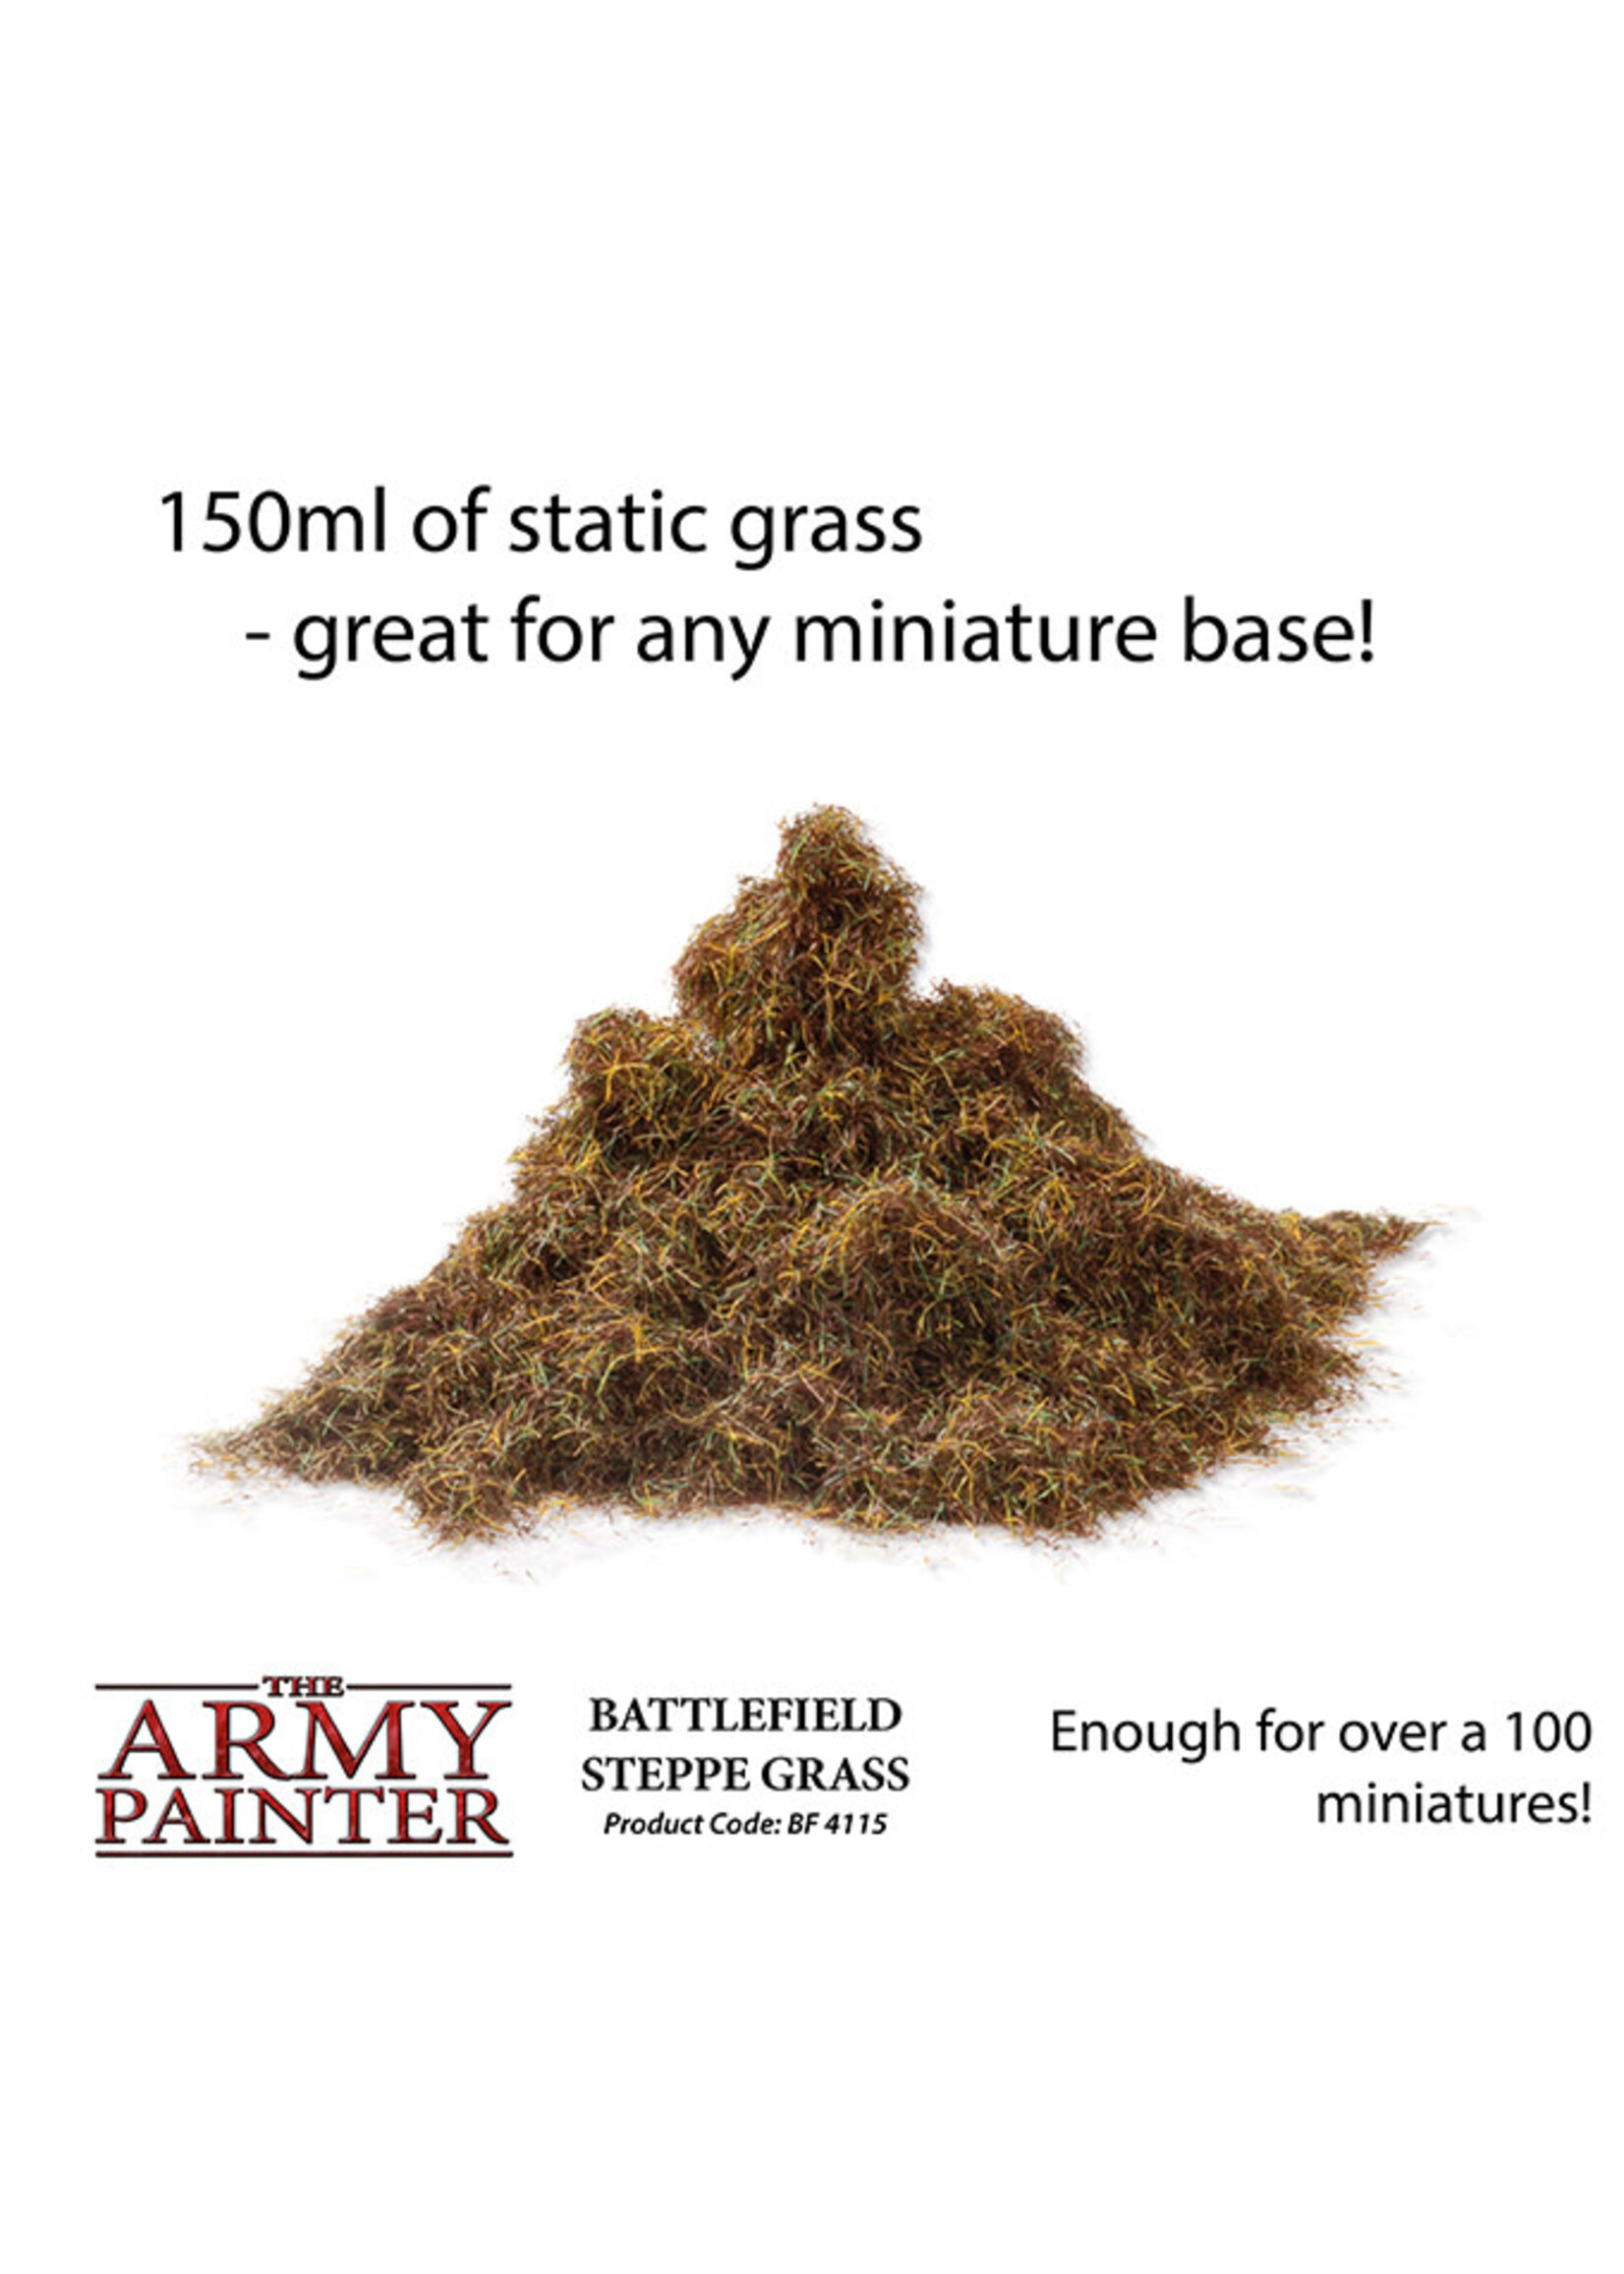 ARMY PAINTER BATTLEFIELDS STATIC STEPPE GRASS (150ML)